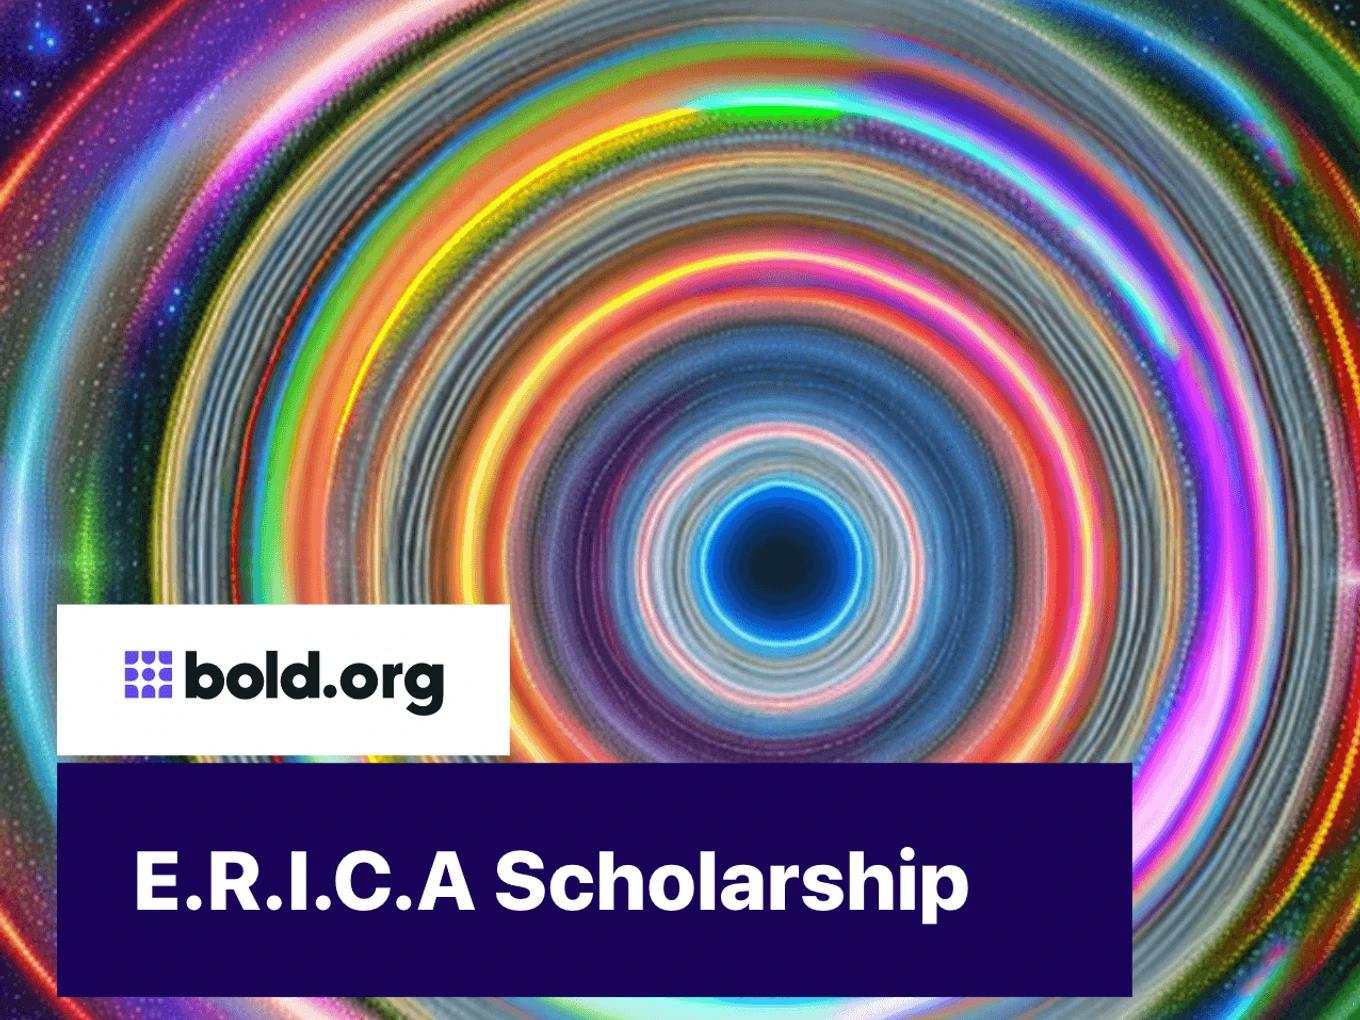 E.R.I.C.A. Scholarship